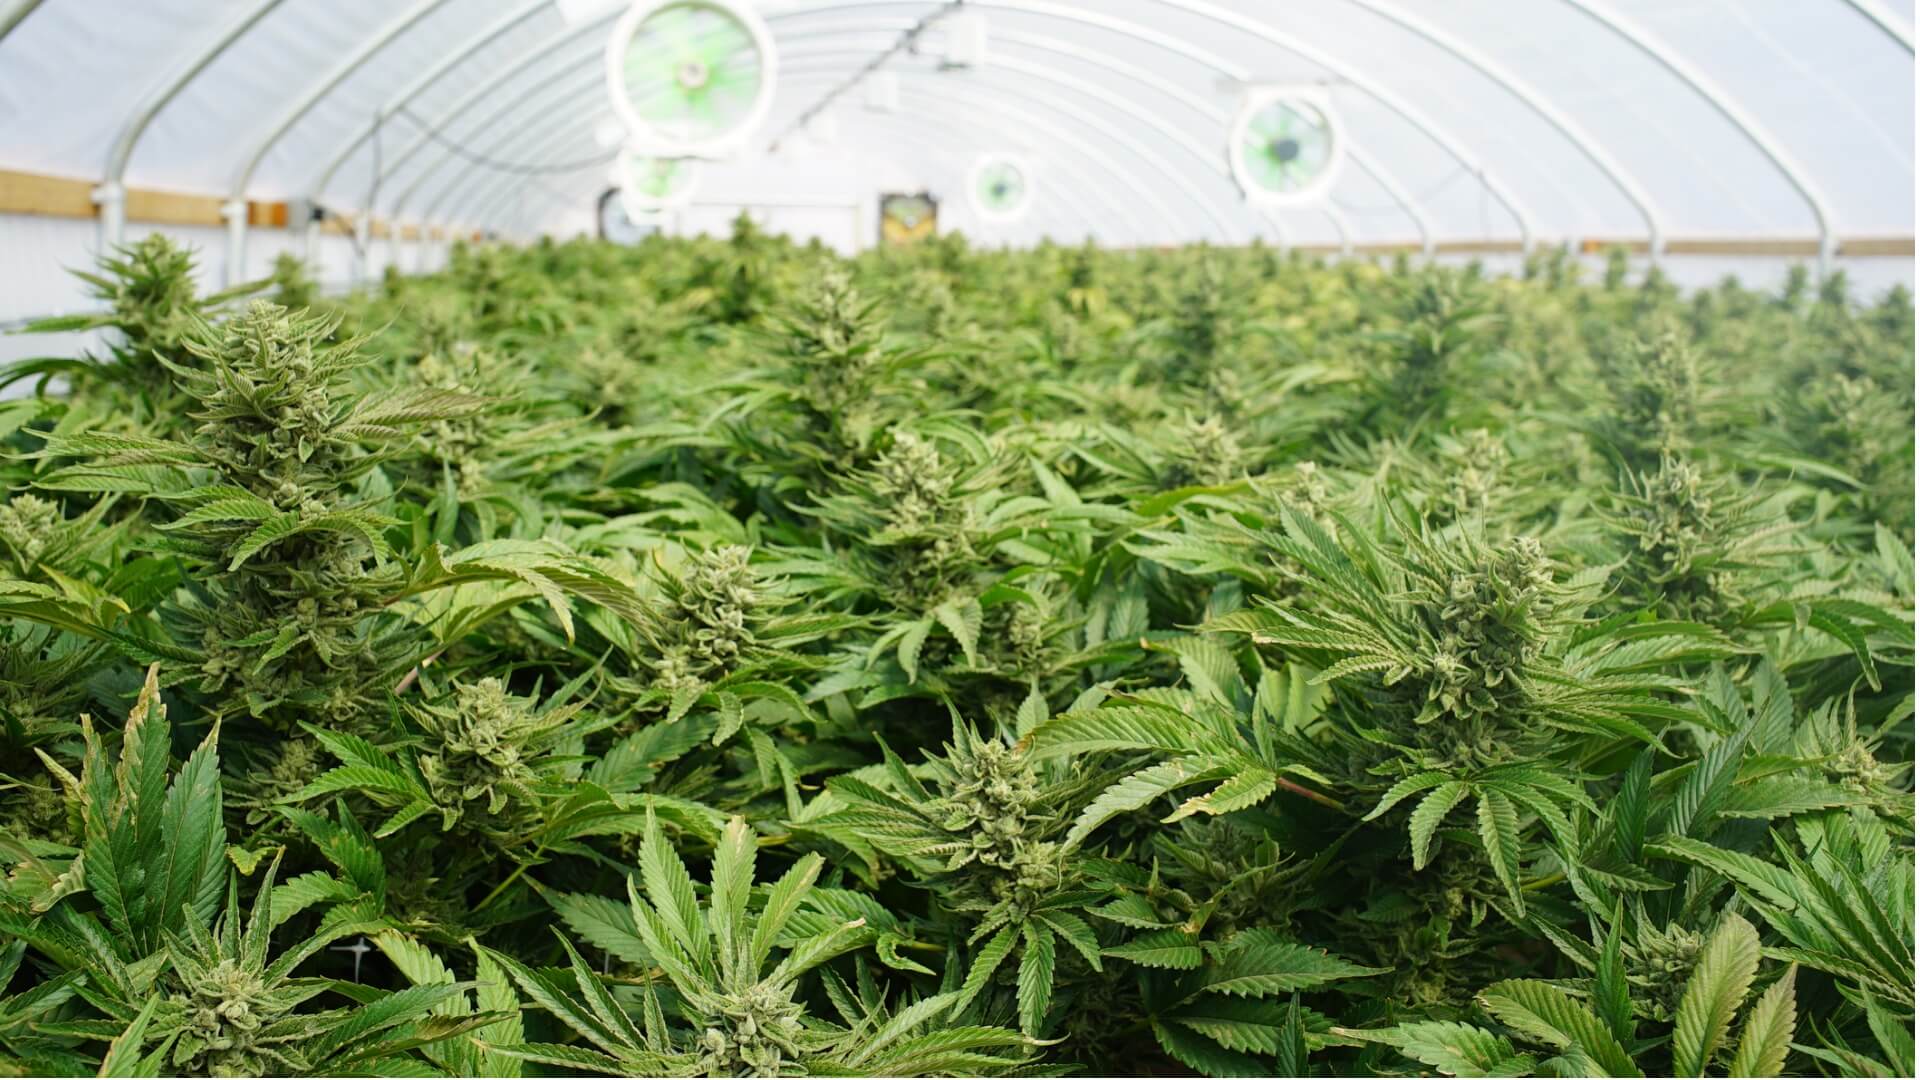 Marijuana plants in a cannabis farm.